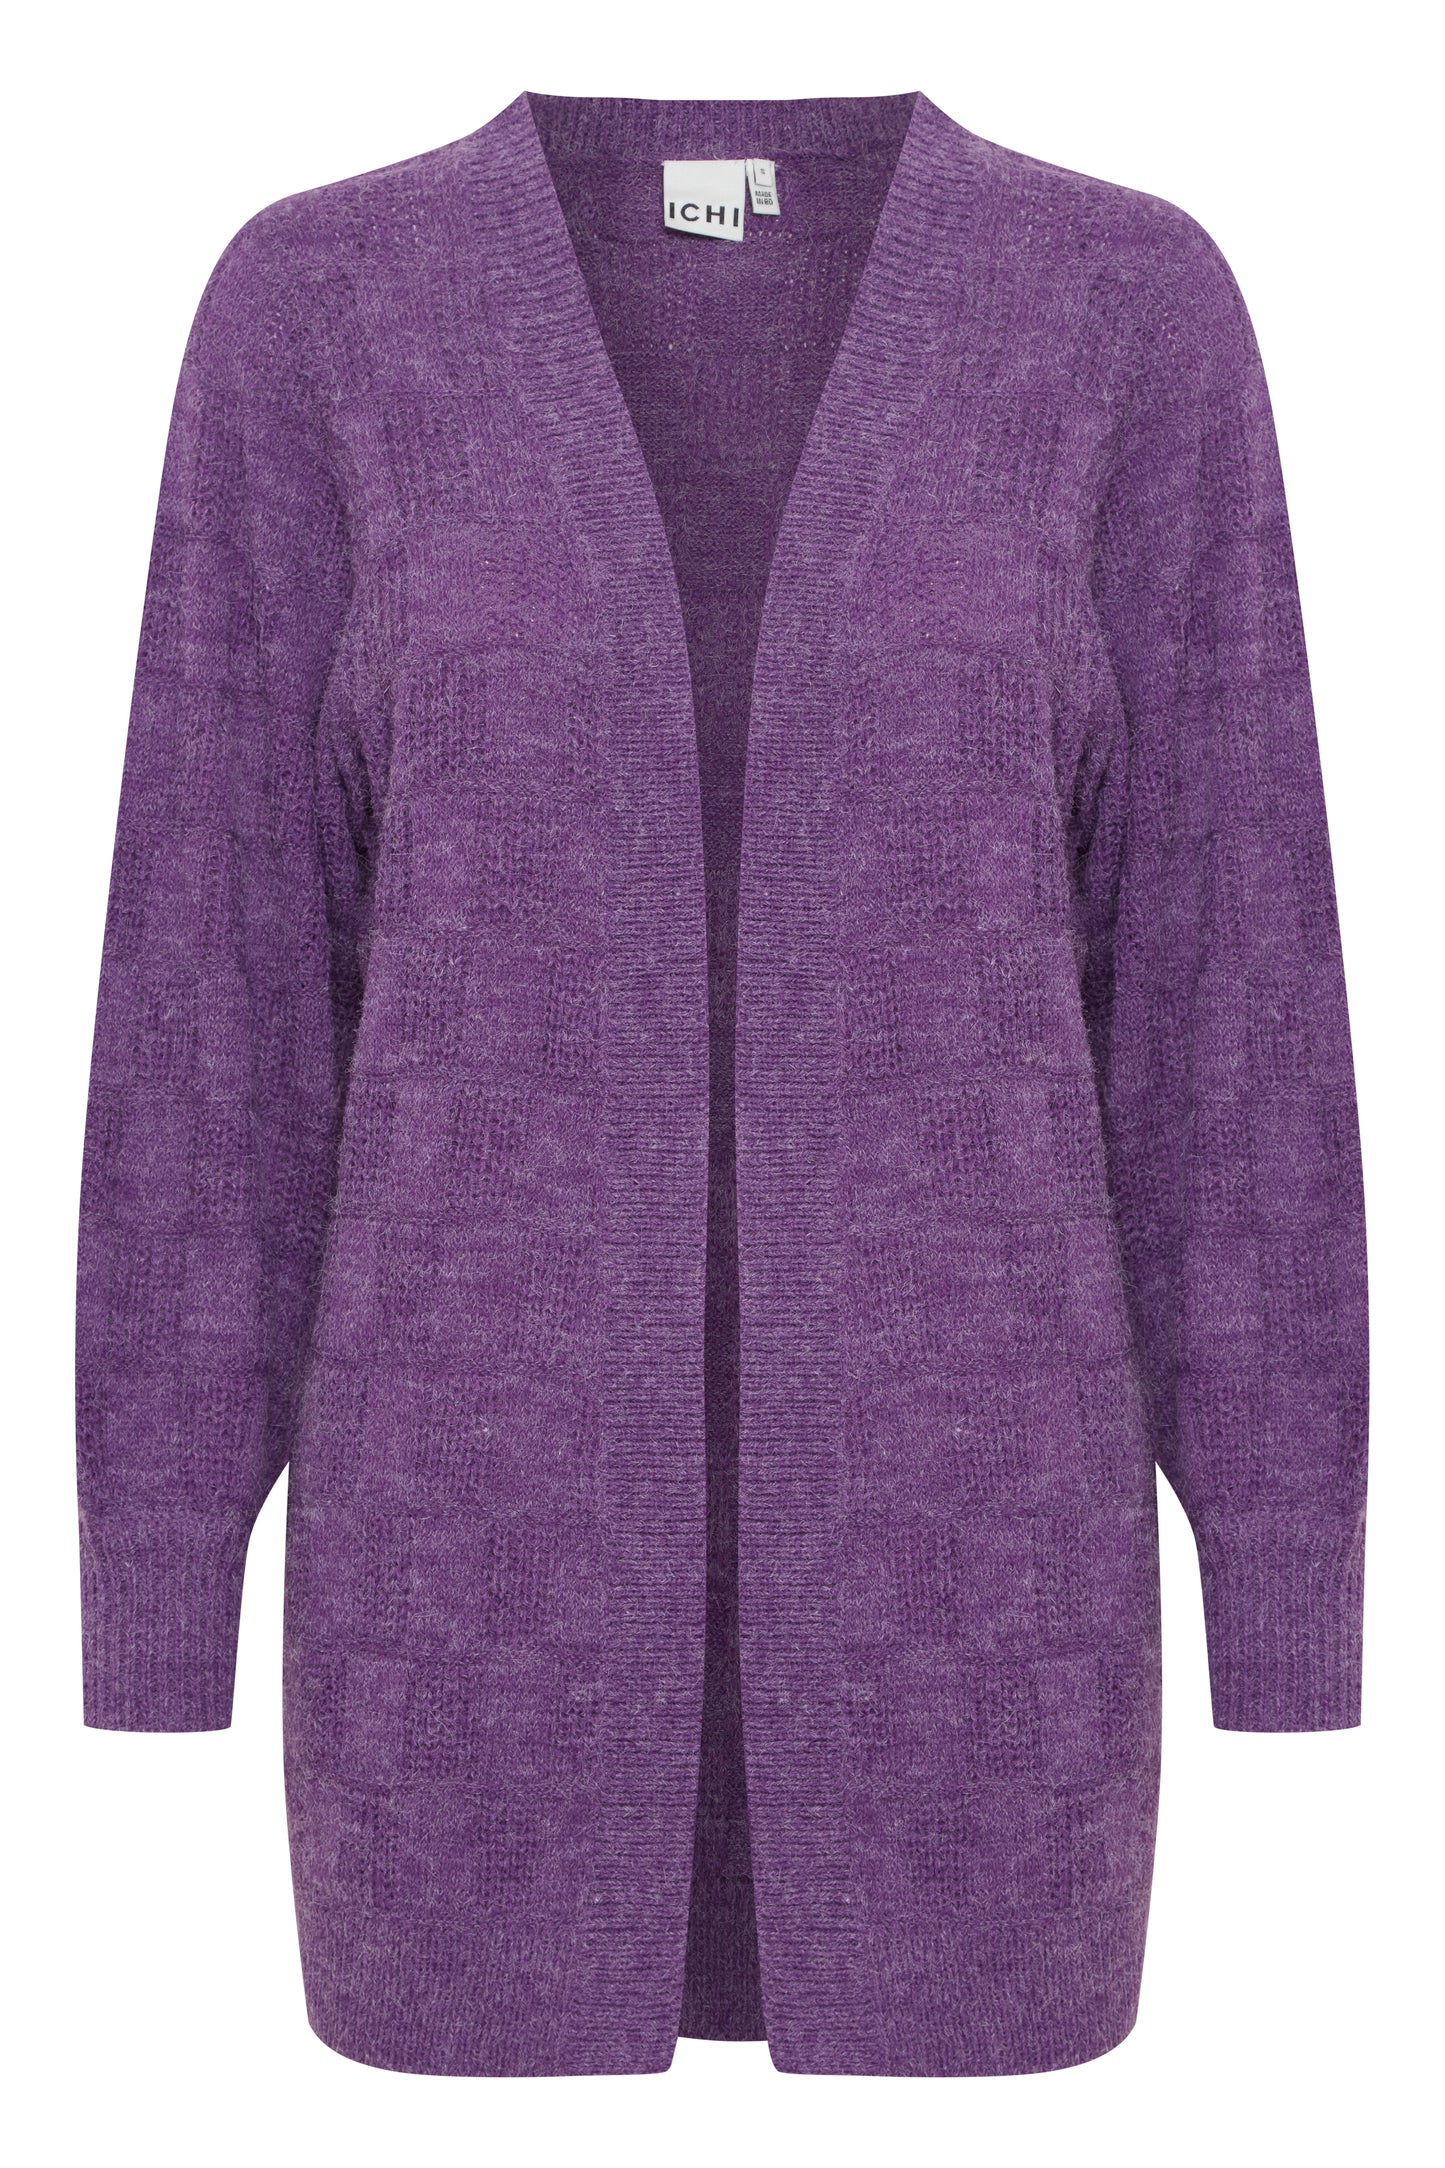 ICHI NOVO Amaranth Purple Knit Cardigan